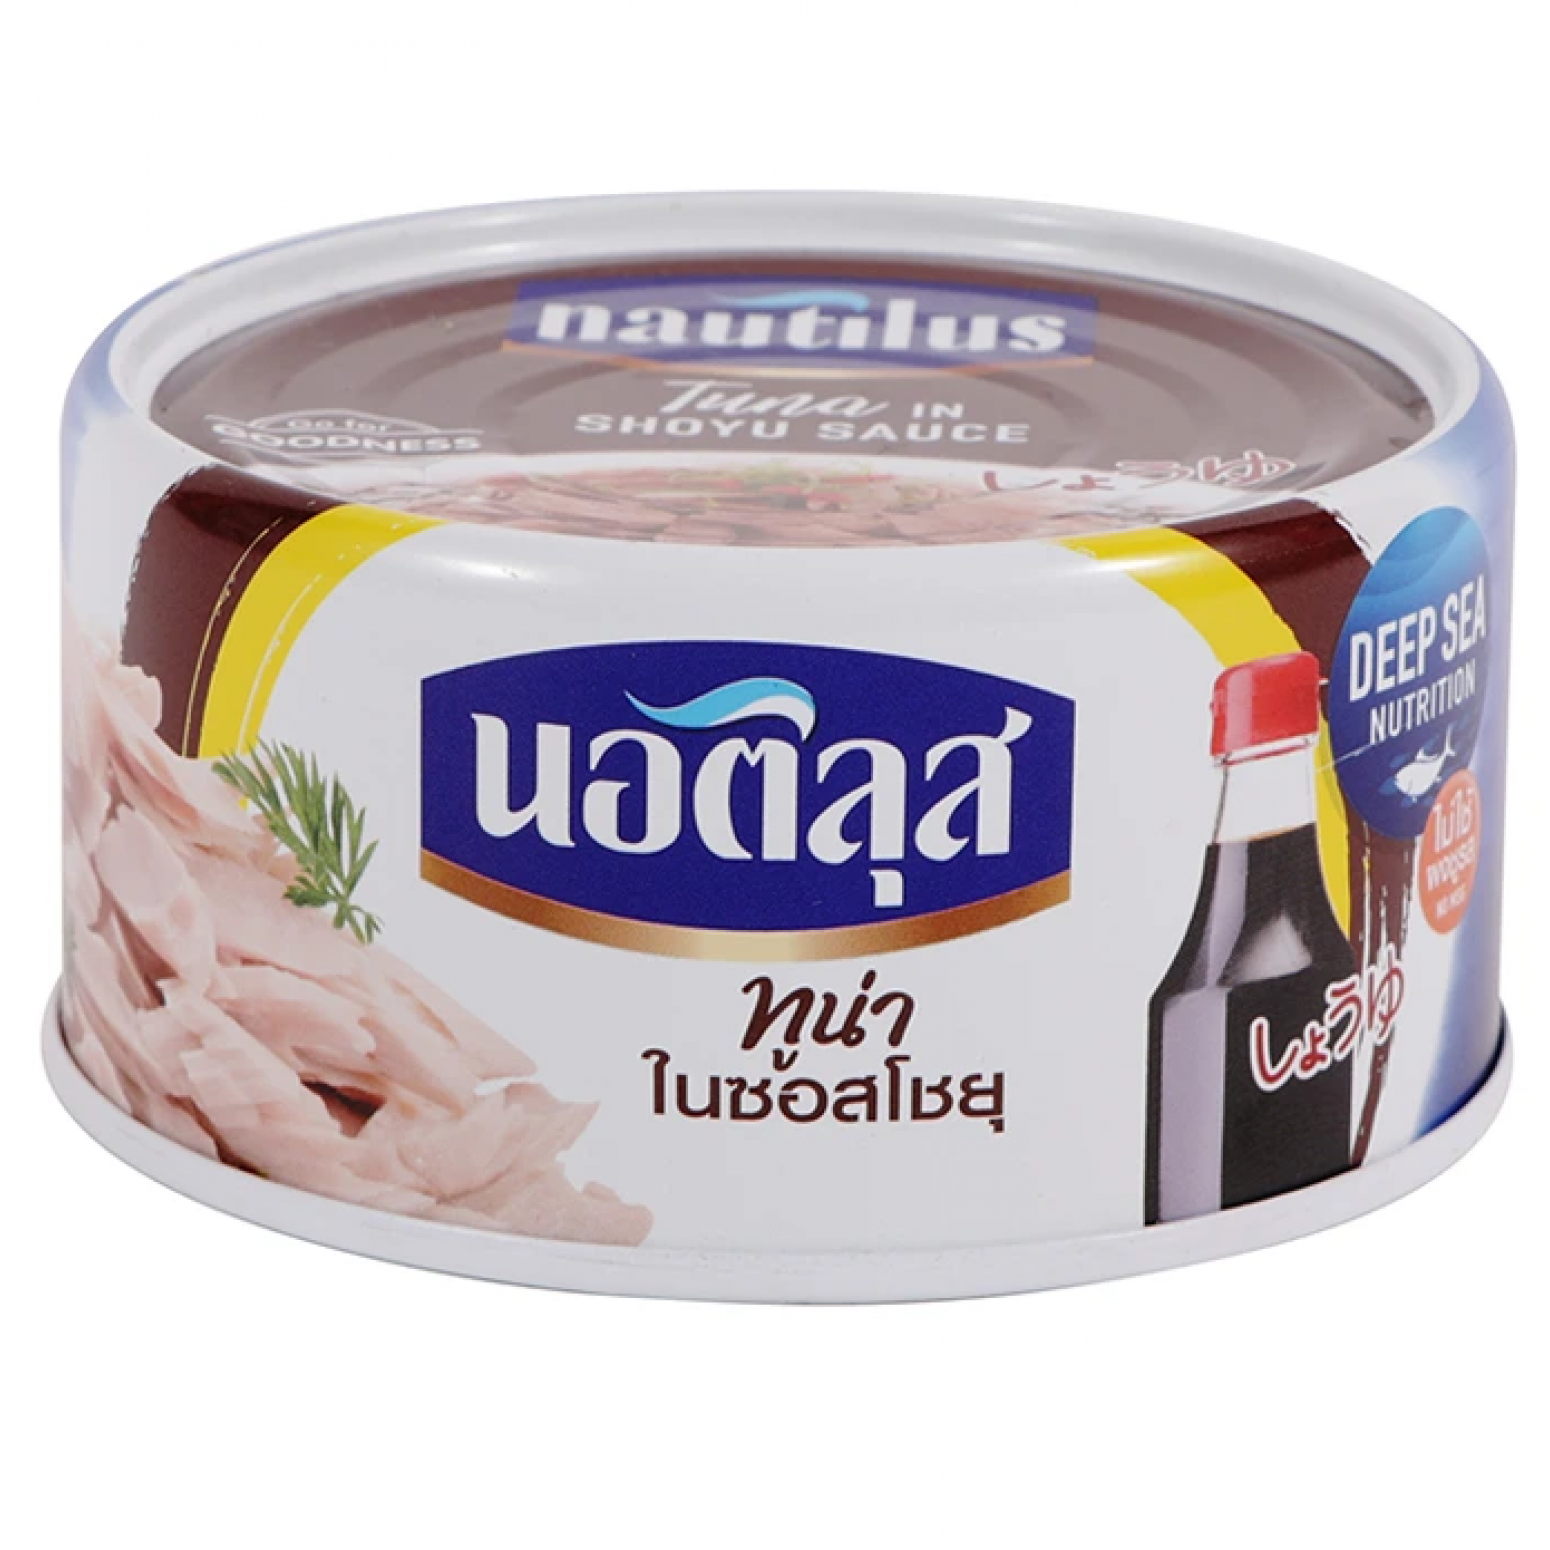 Nautilus Tuna in Shoyu Sauce 165g.